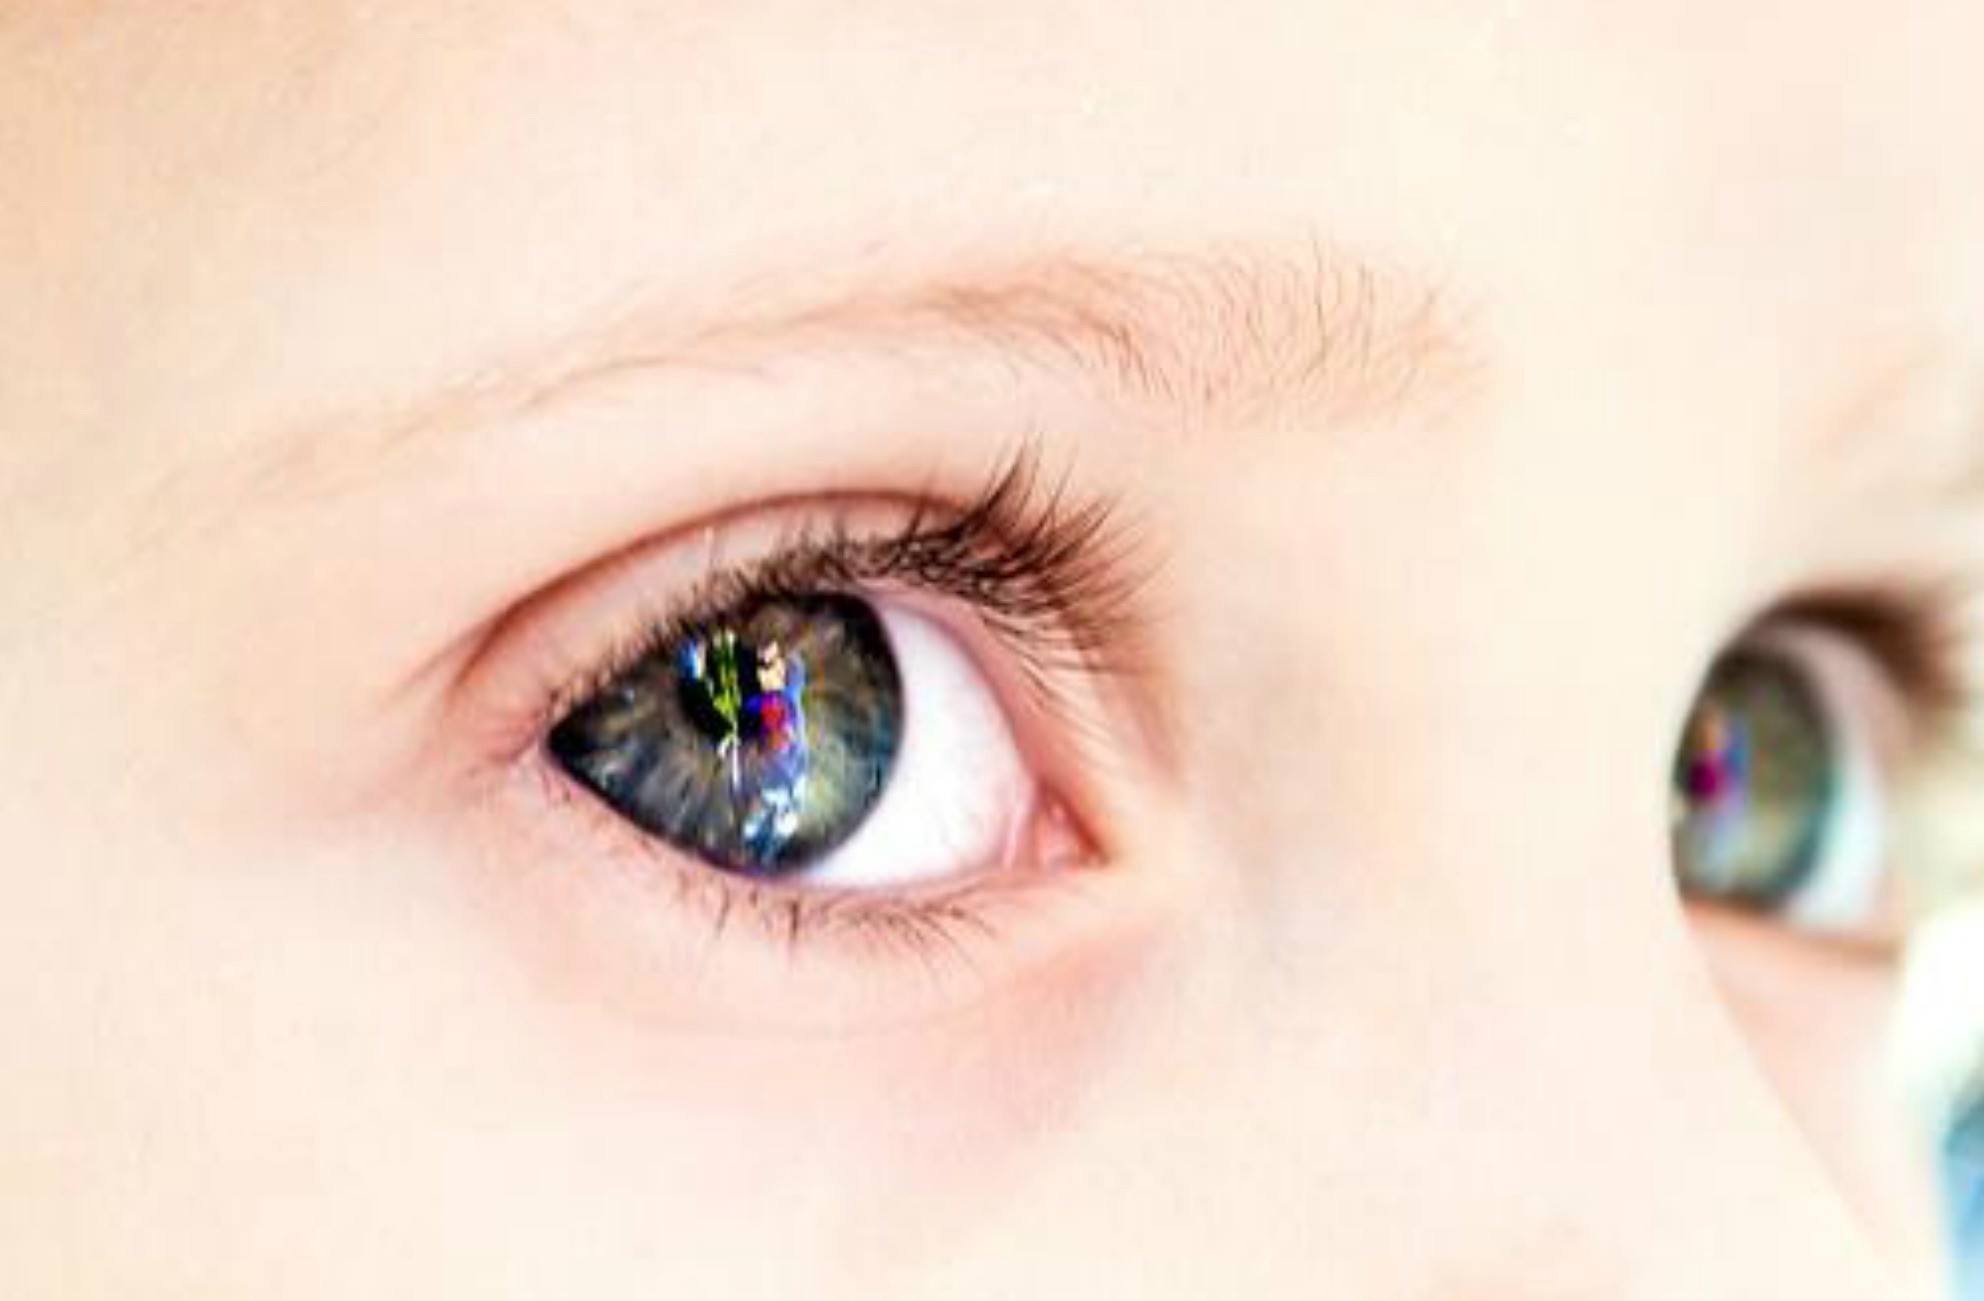 Malalties oculars freqüents en els nens